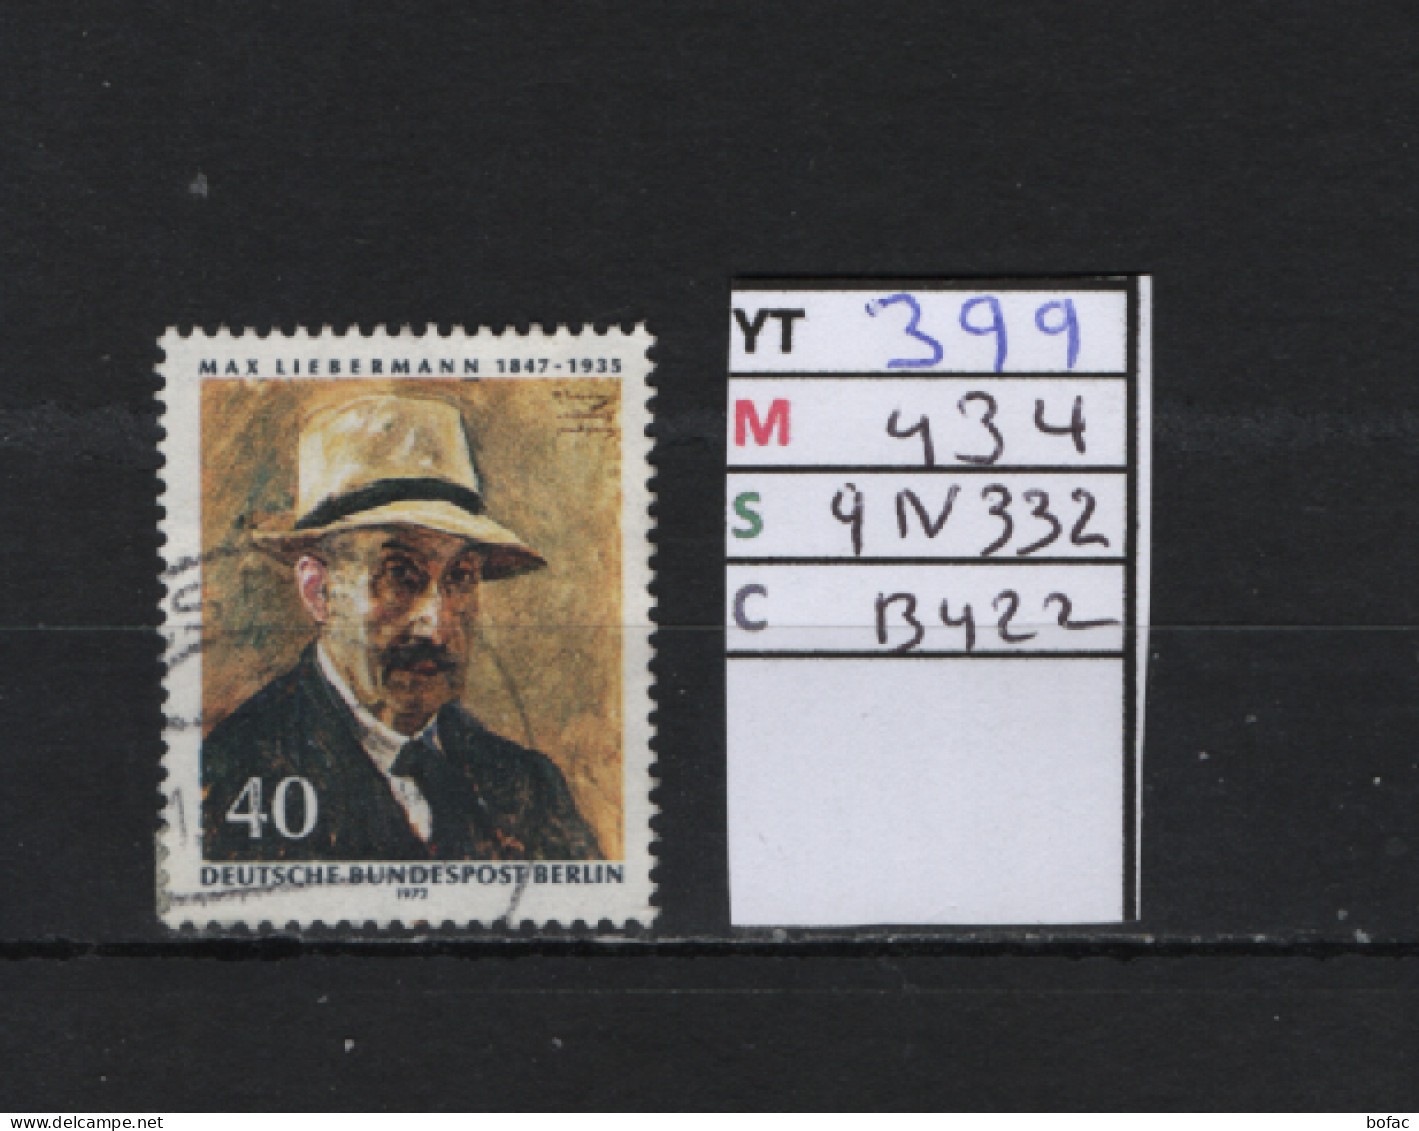 P. FIXE Obl 399 YT 434 MIC 9N332 SCO B422 GIB Max Liebermann 1972 *Berlin* 75/03 - Used Stamps